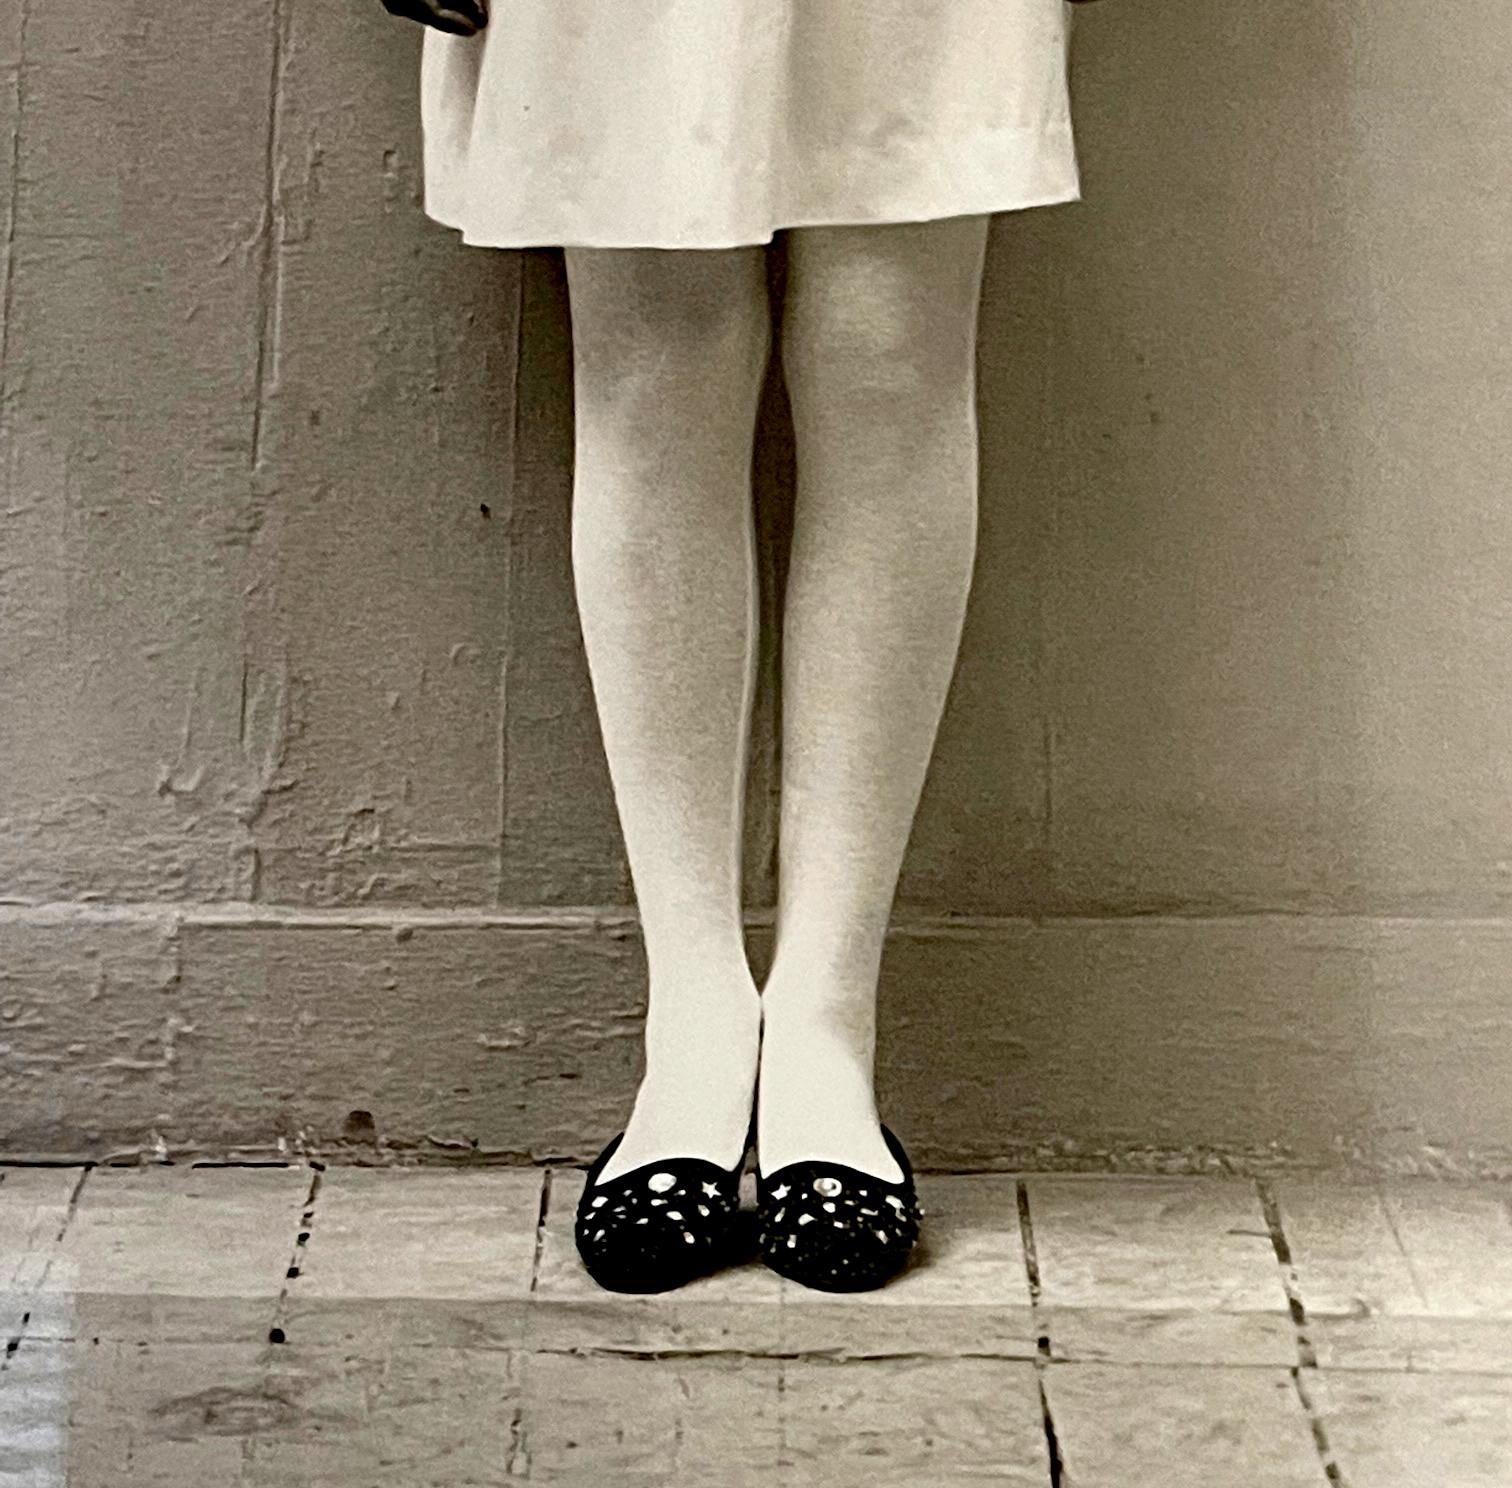 Scottish Framed Vintage Photograph Leslie Winer in Yohji Yamamoto by Albert Watson For Sale